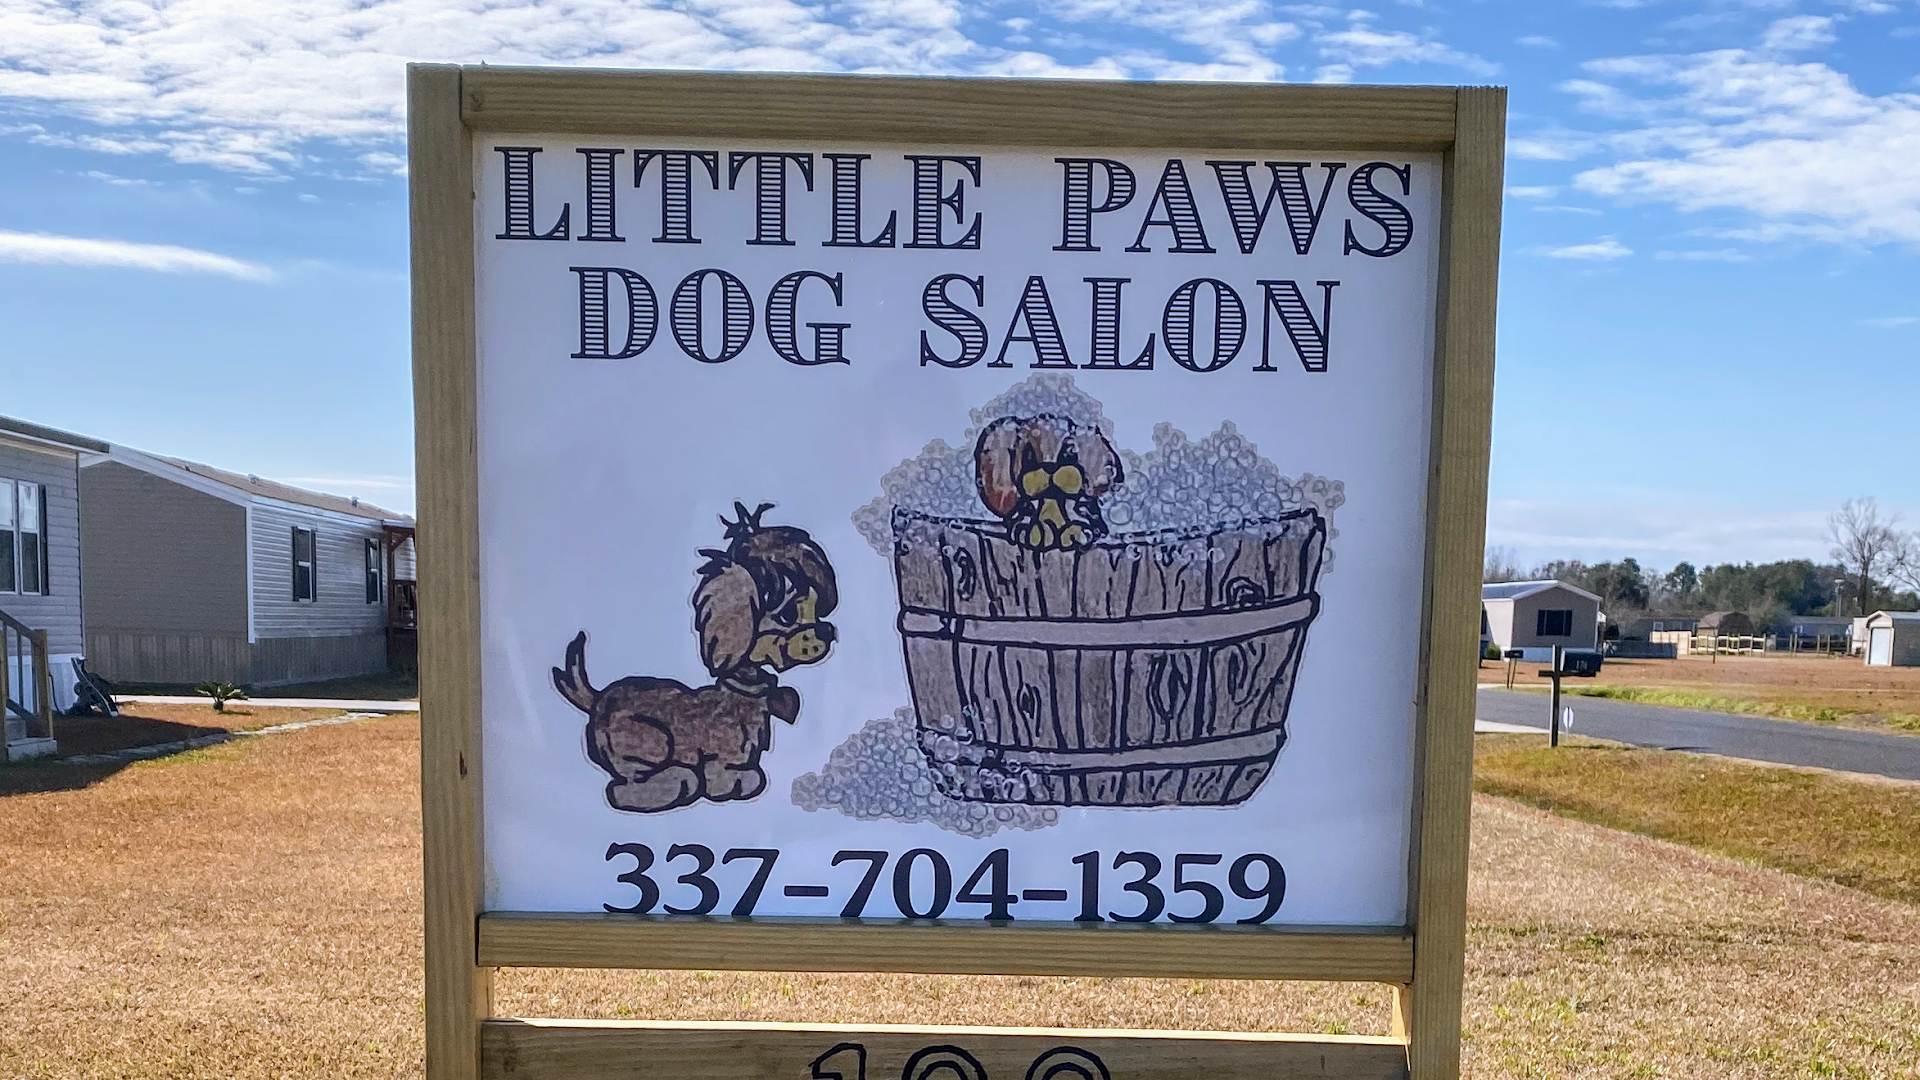 Little PAW’S Dog Salon